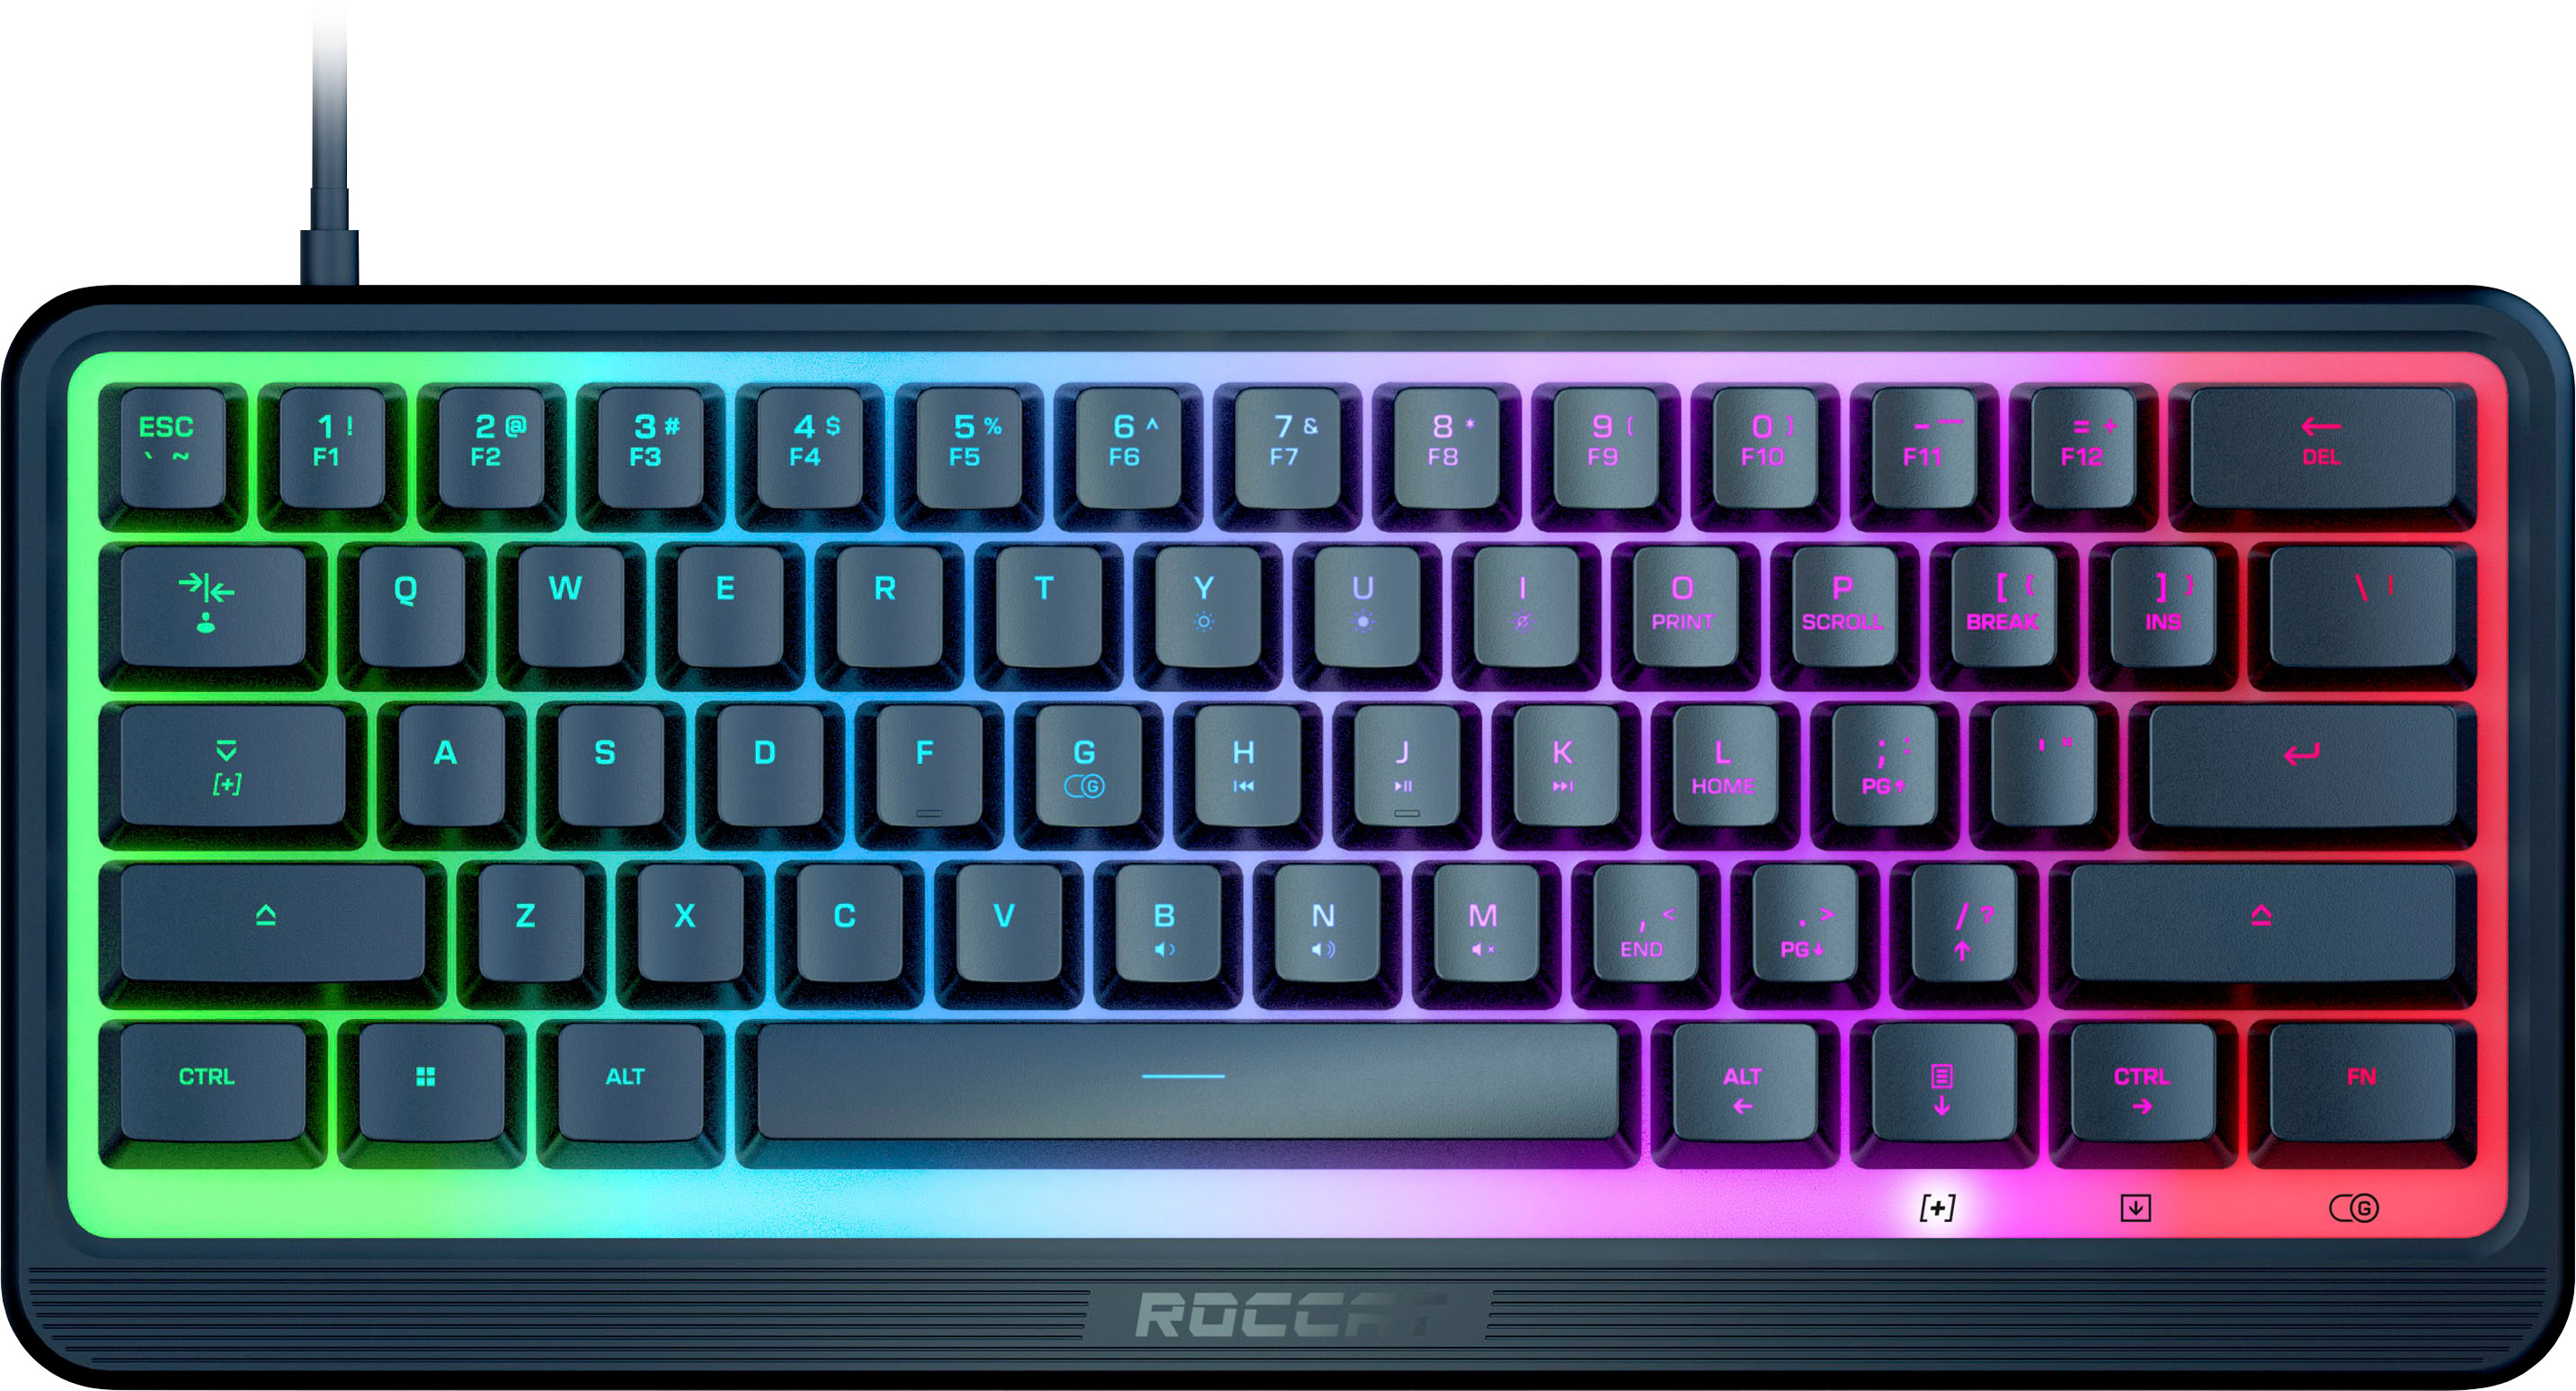 Roccat Magma RGB Gaming Keyboard review